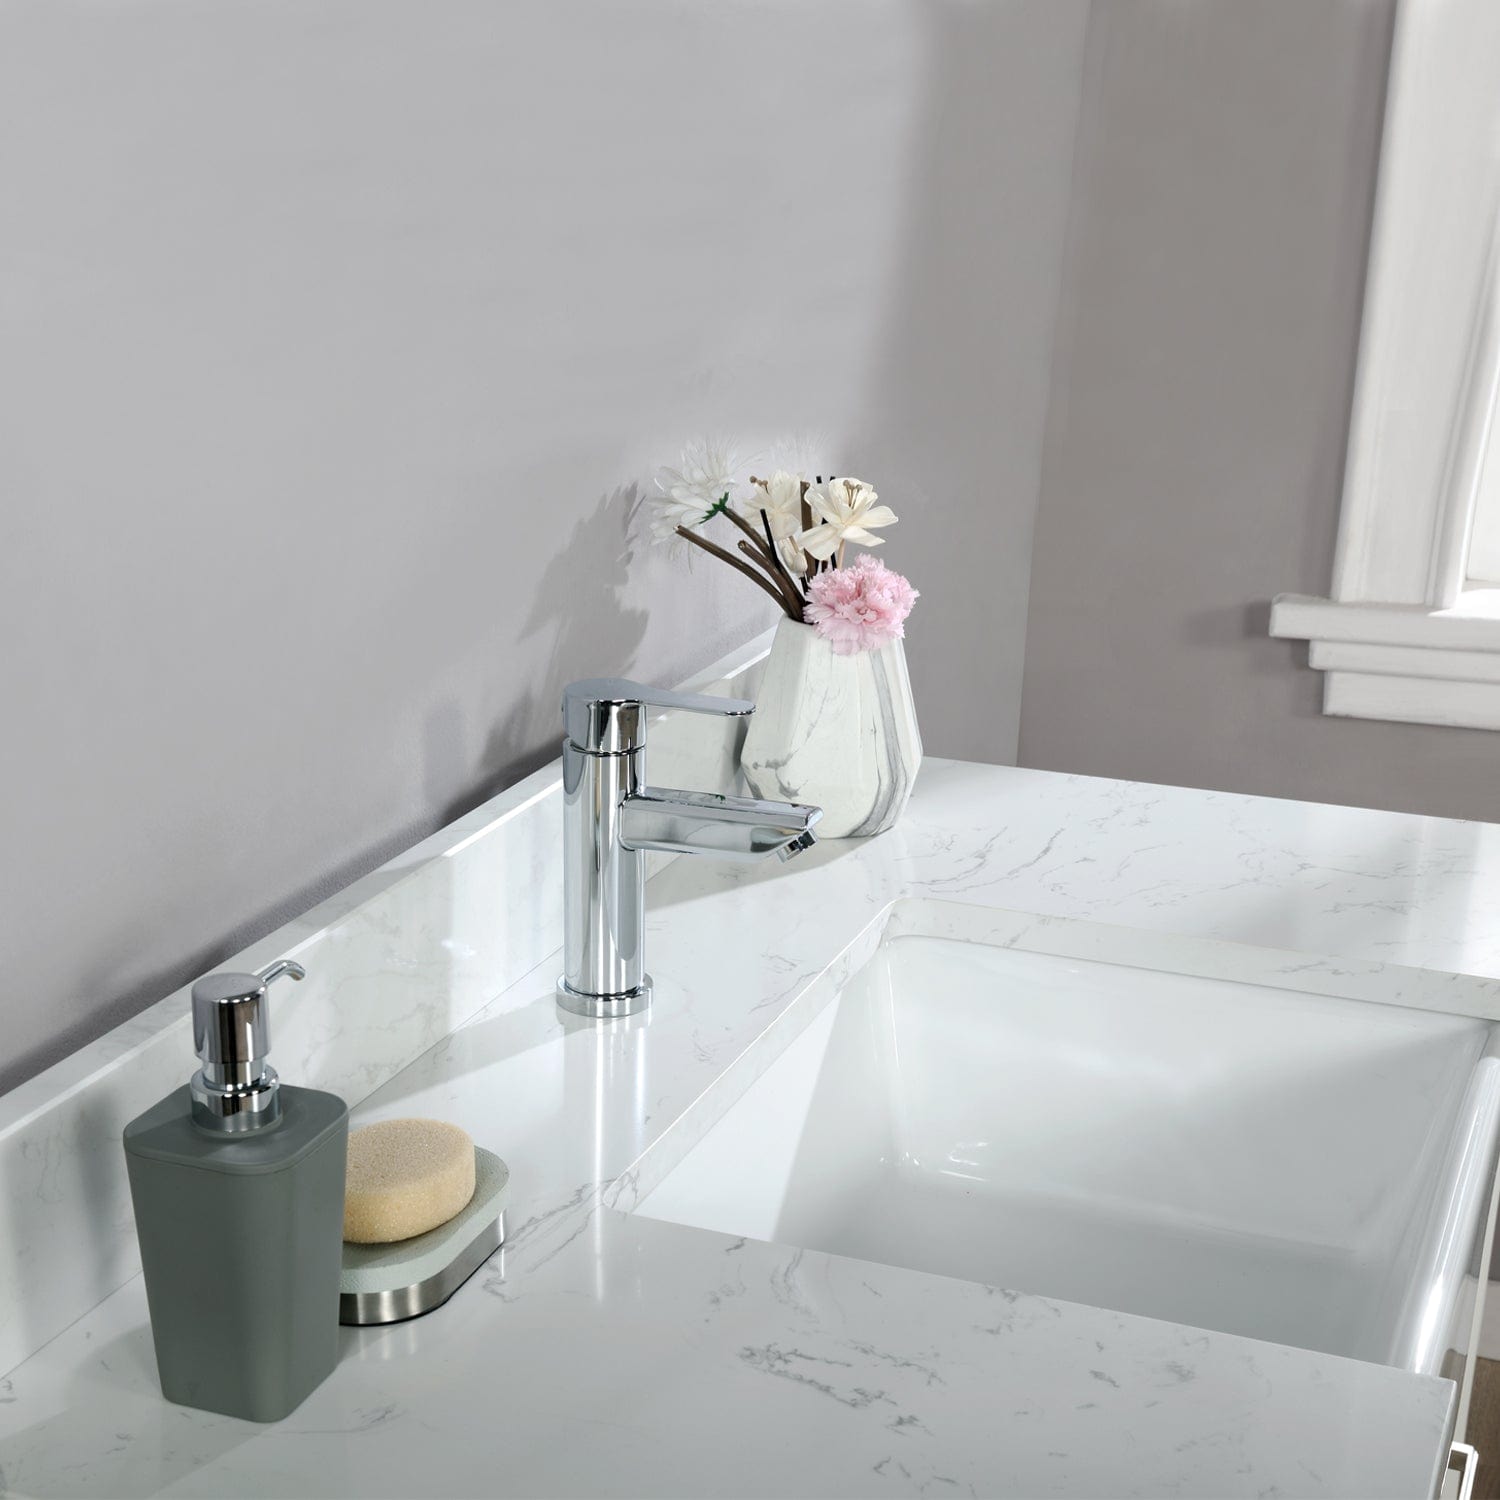 Altair Georgia 42" Single Bathroom Vanity Set in White and Composite Carrara White Stone Top with White Farmhouse Basin without Mirror 537042-WH-AW-NM - Molaix696952511321Vanity537042-WH-AW-NM